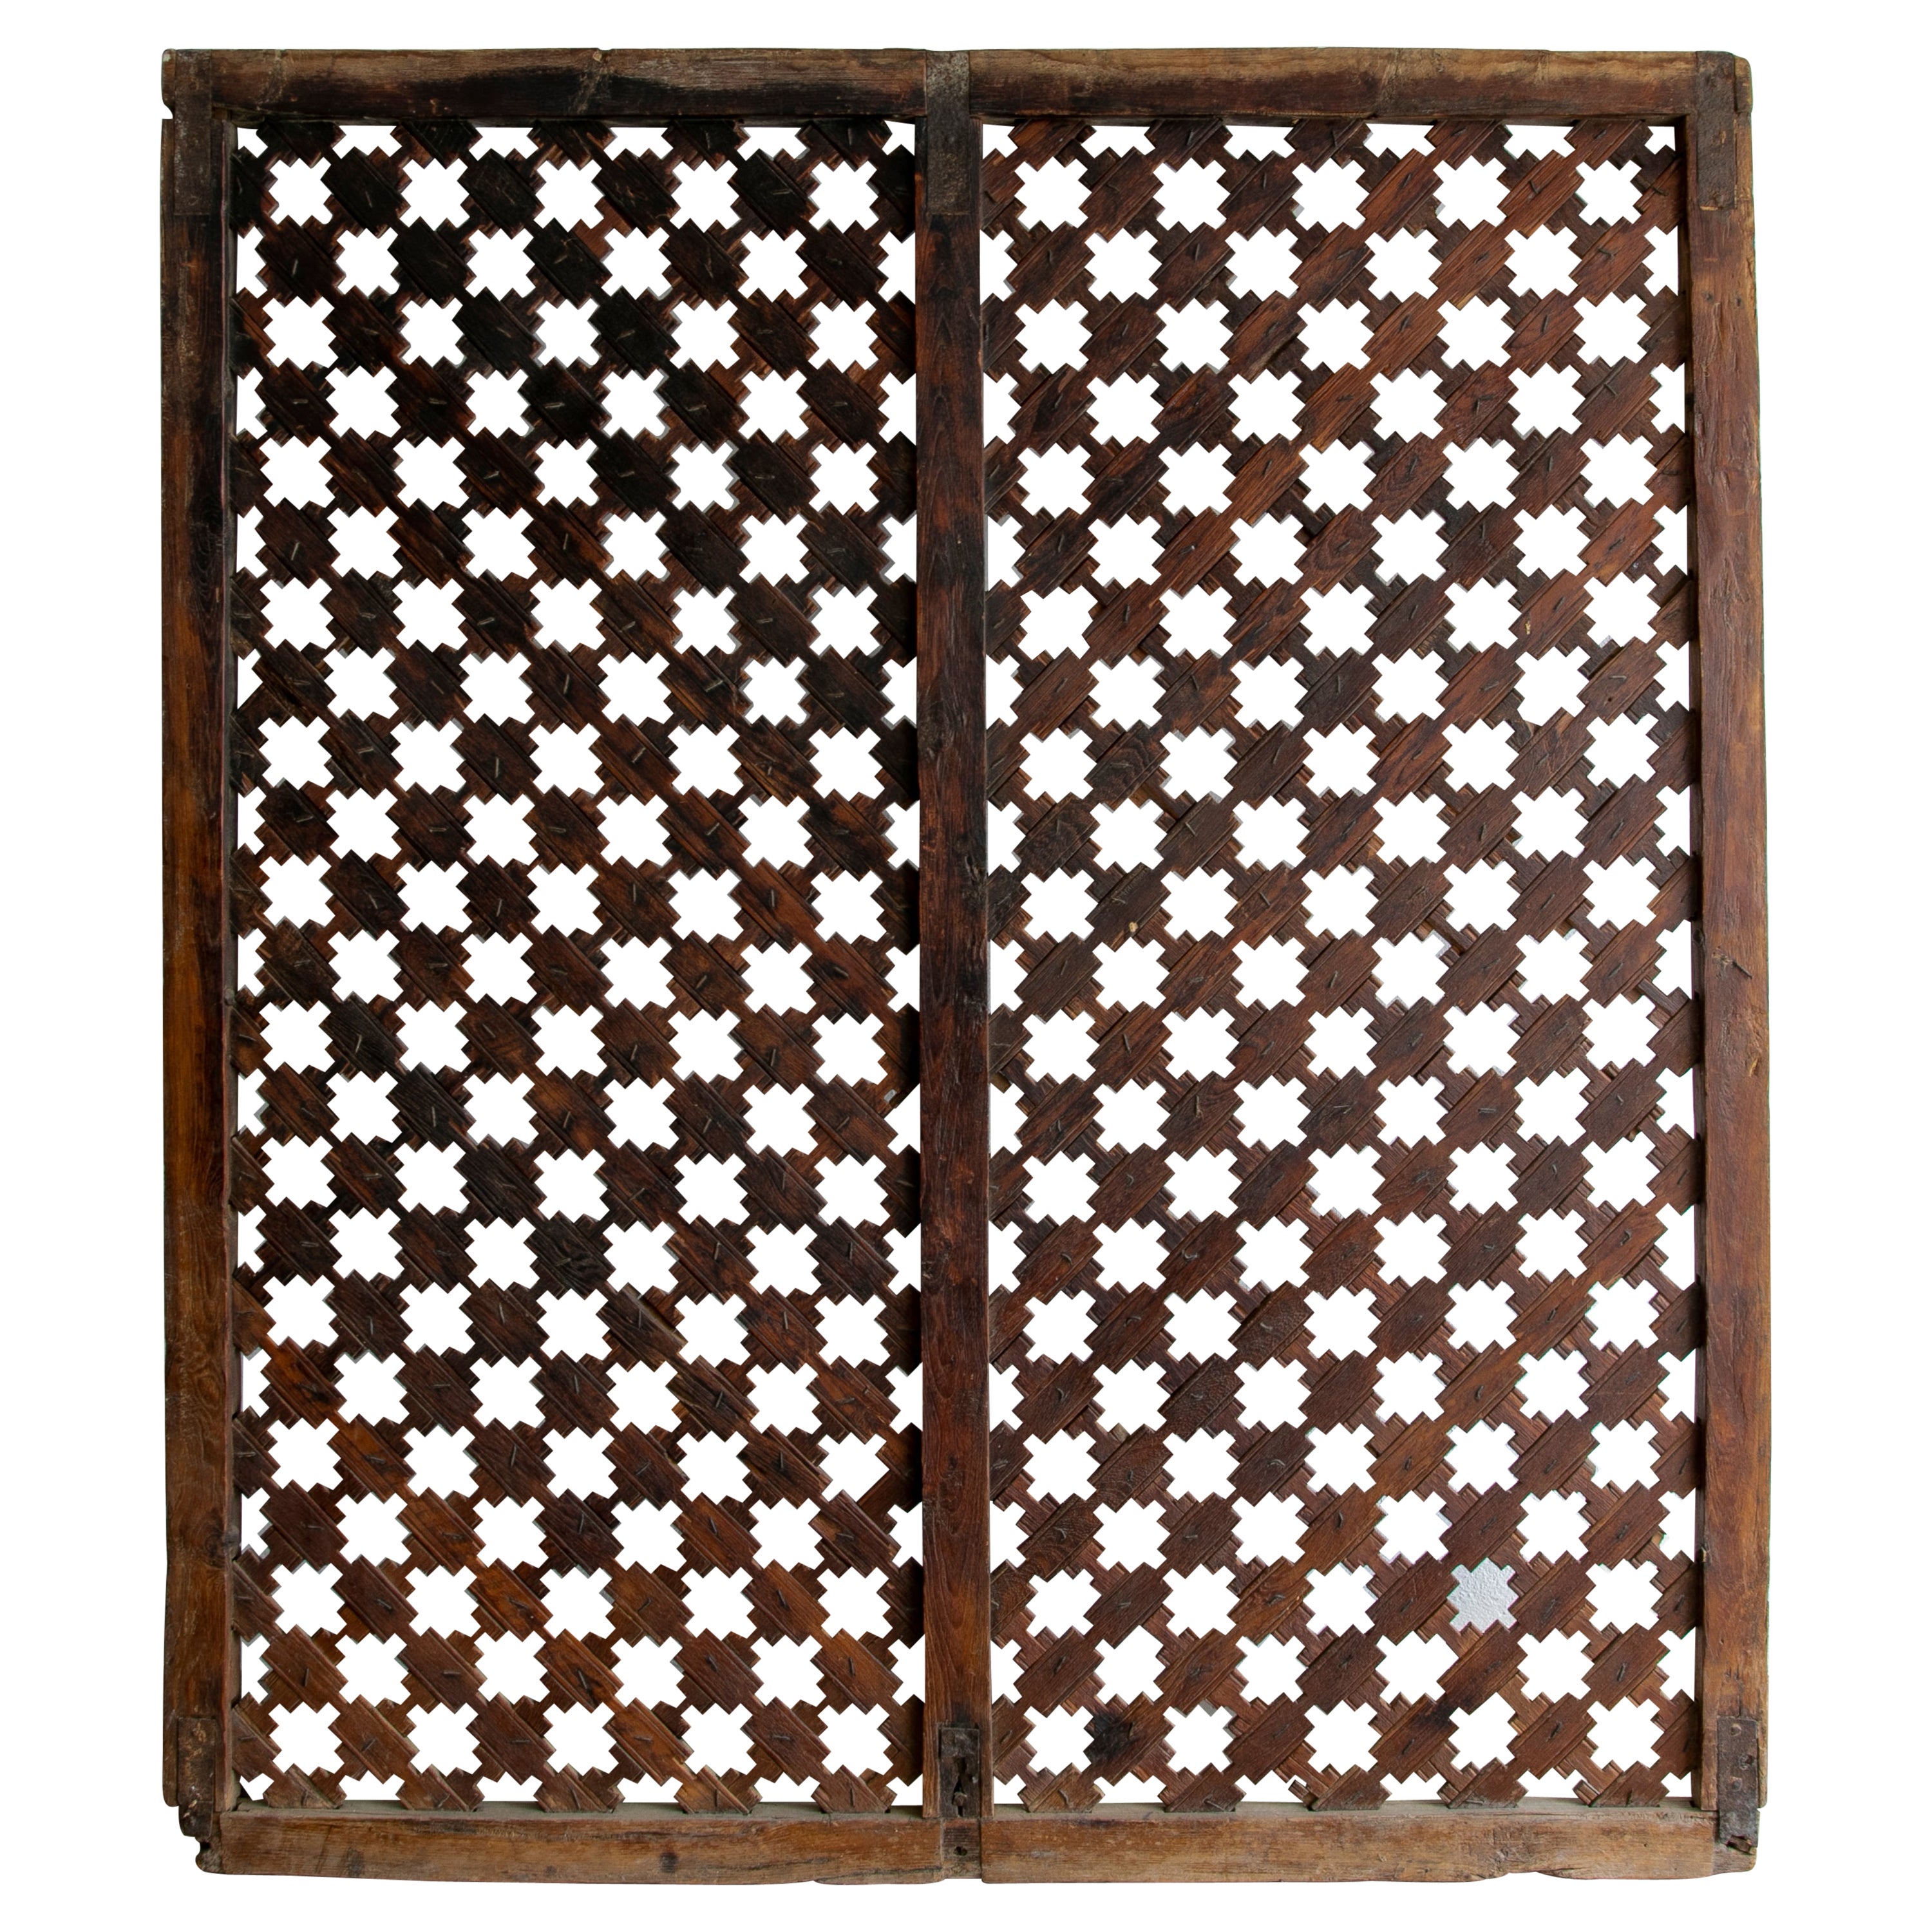 1950s European Wooden Geometric Latticework Screen w/ Iron Joined Woven Strips 